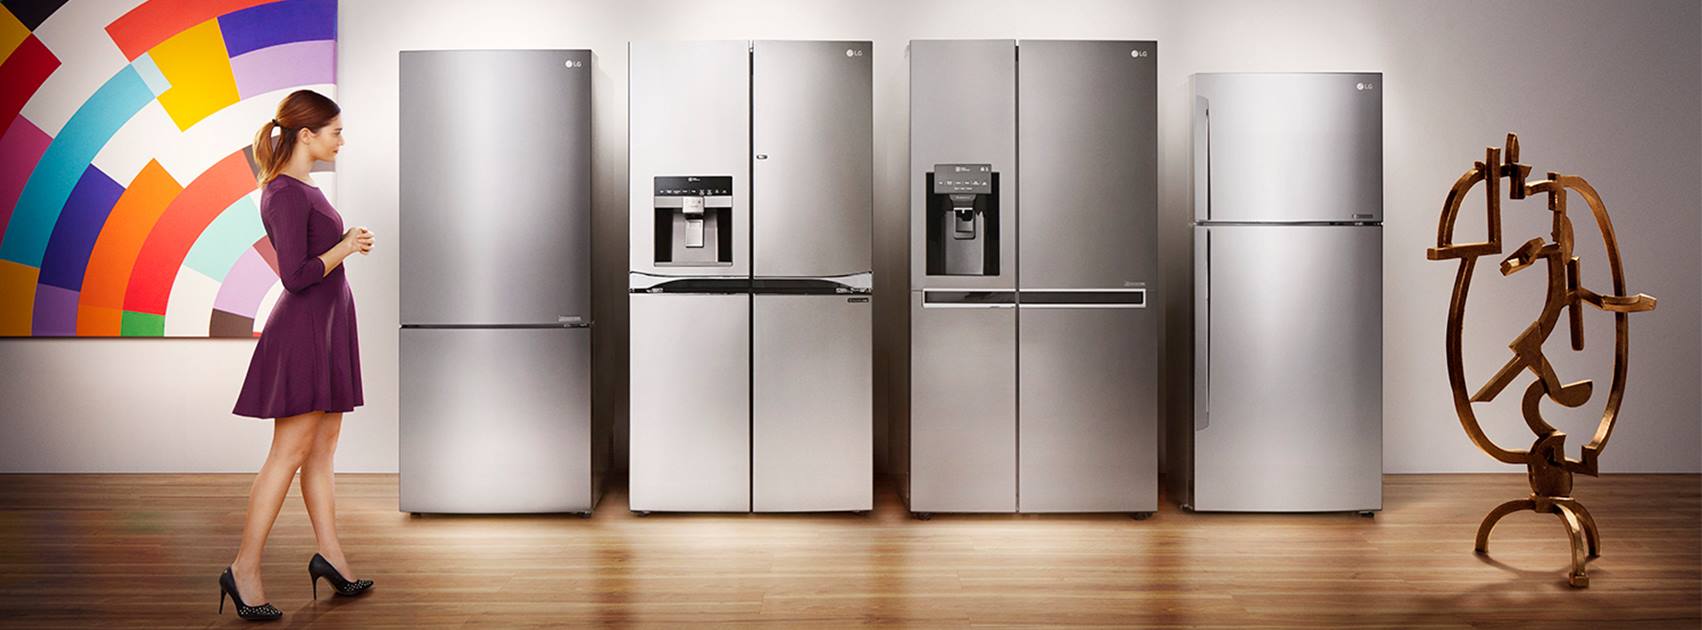 Save $100 OFF on selected Refrigerators, Ovens, Dishwashers, & Washing Machine at LG